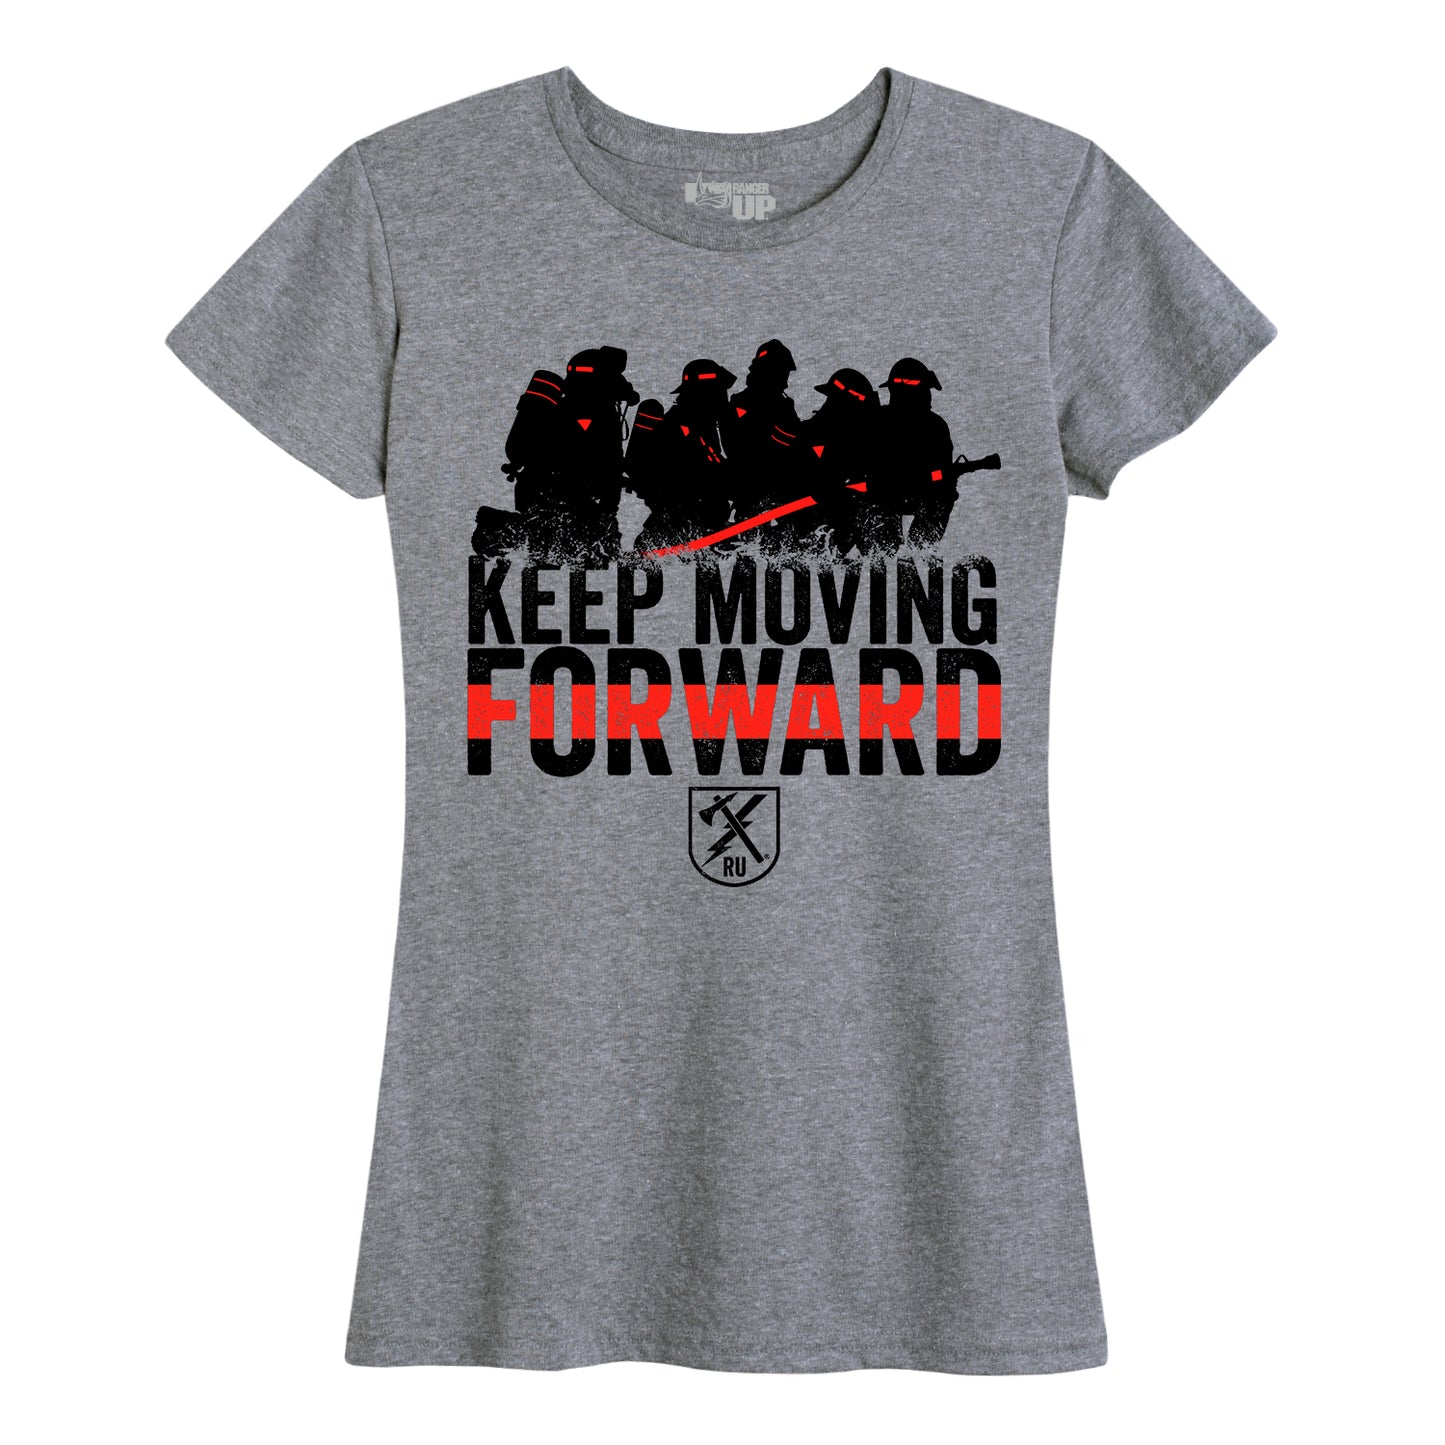 Women's Keep Moving Forward (Fire) Tee